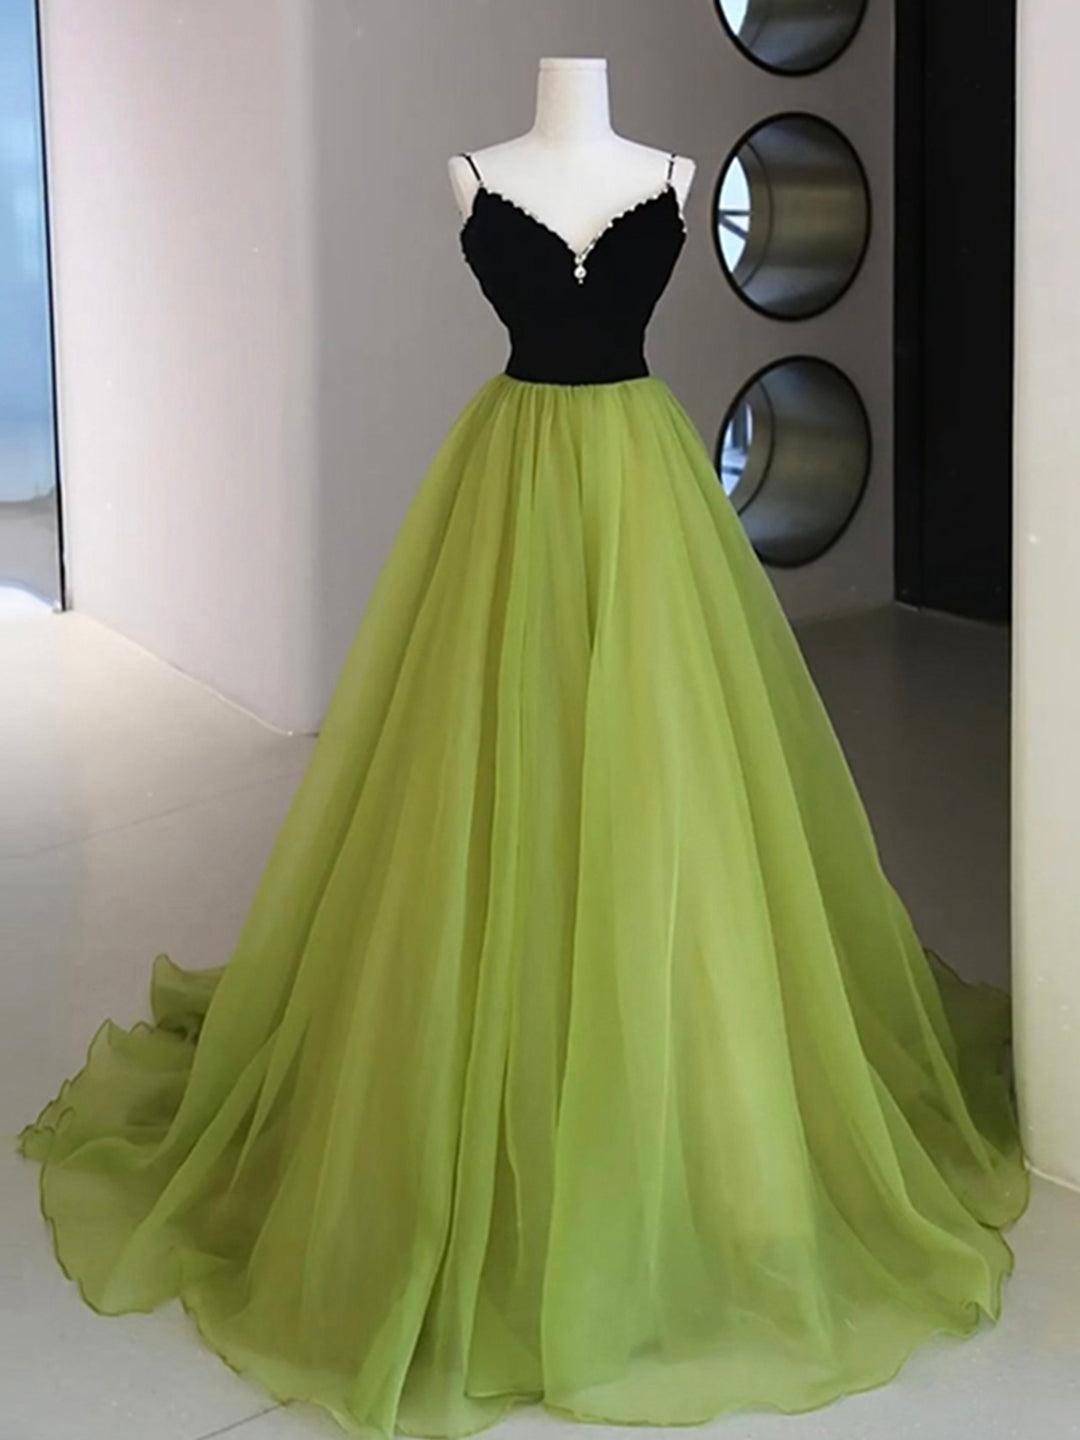 Black Velvet and Green Tulle Long Corset Prom Dress, Green V-Neck Evening Dress outfit, Bridesmaids Dress Gold